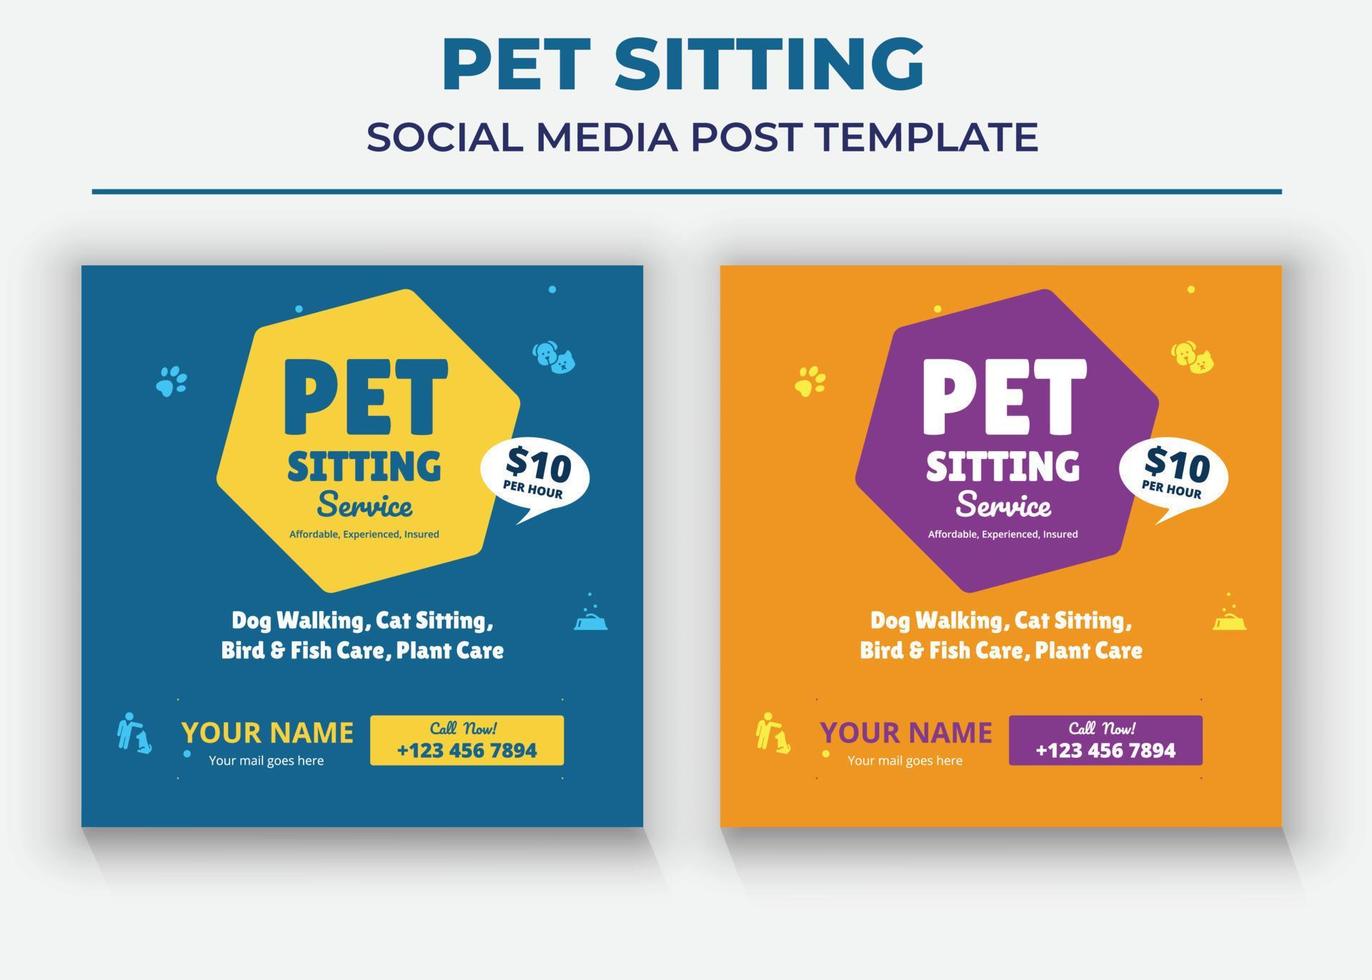 Pet Care Social Media Post Template, Pet Sitting Social Media Post Template, Pet Walkers poster vector